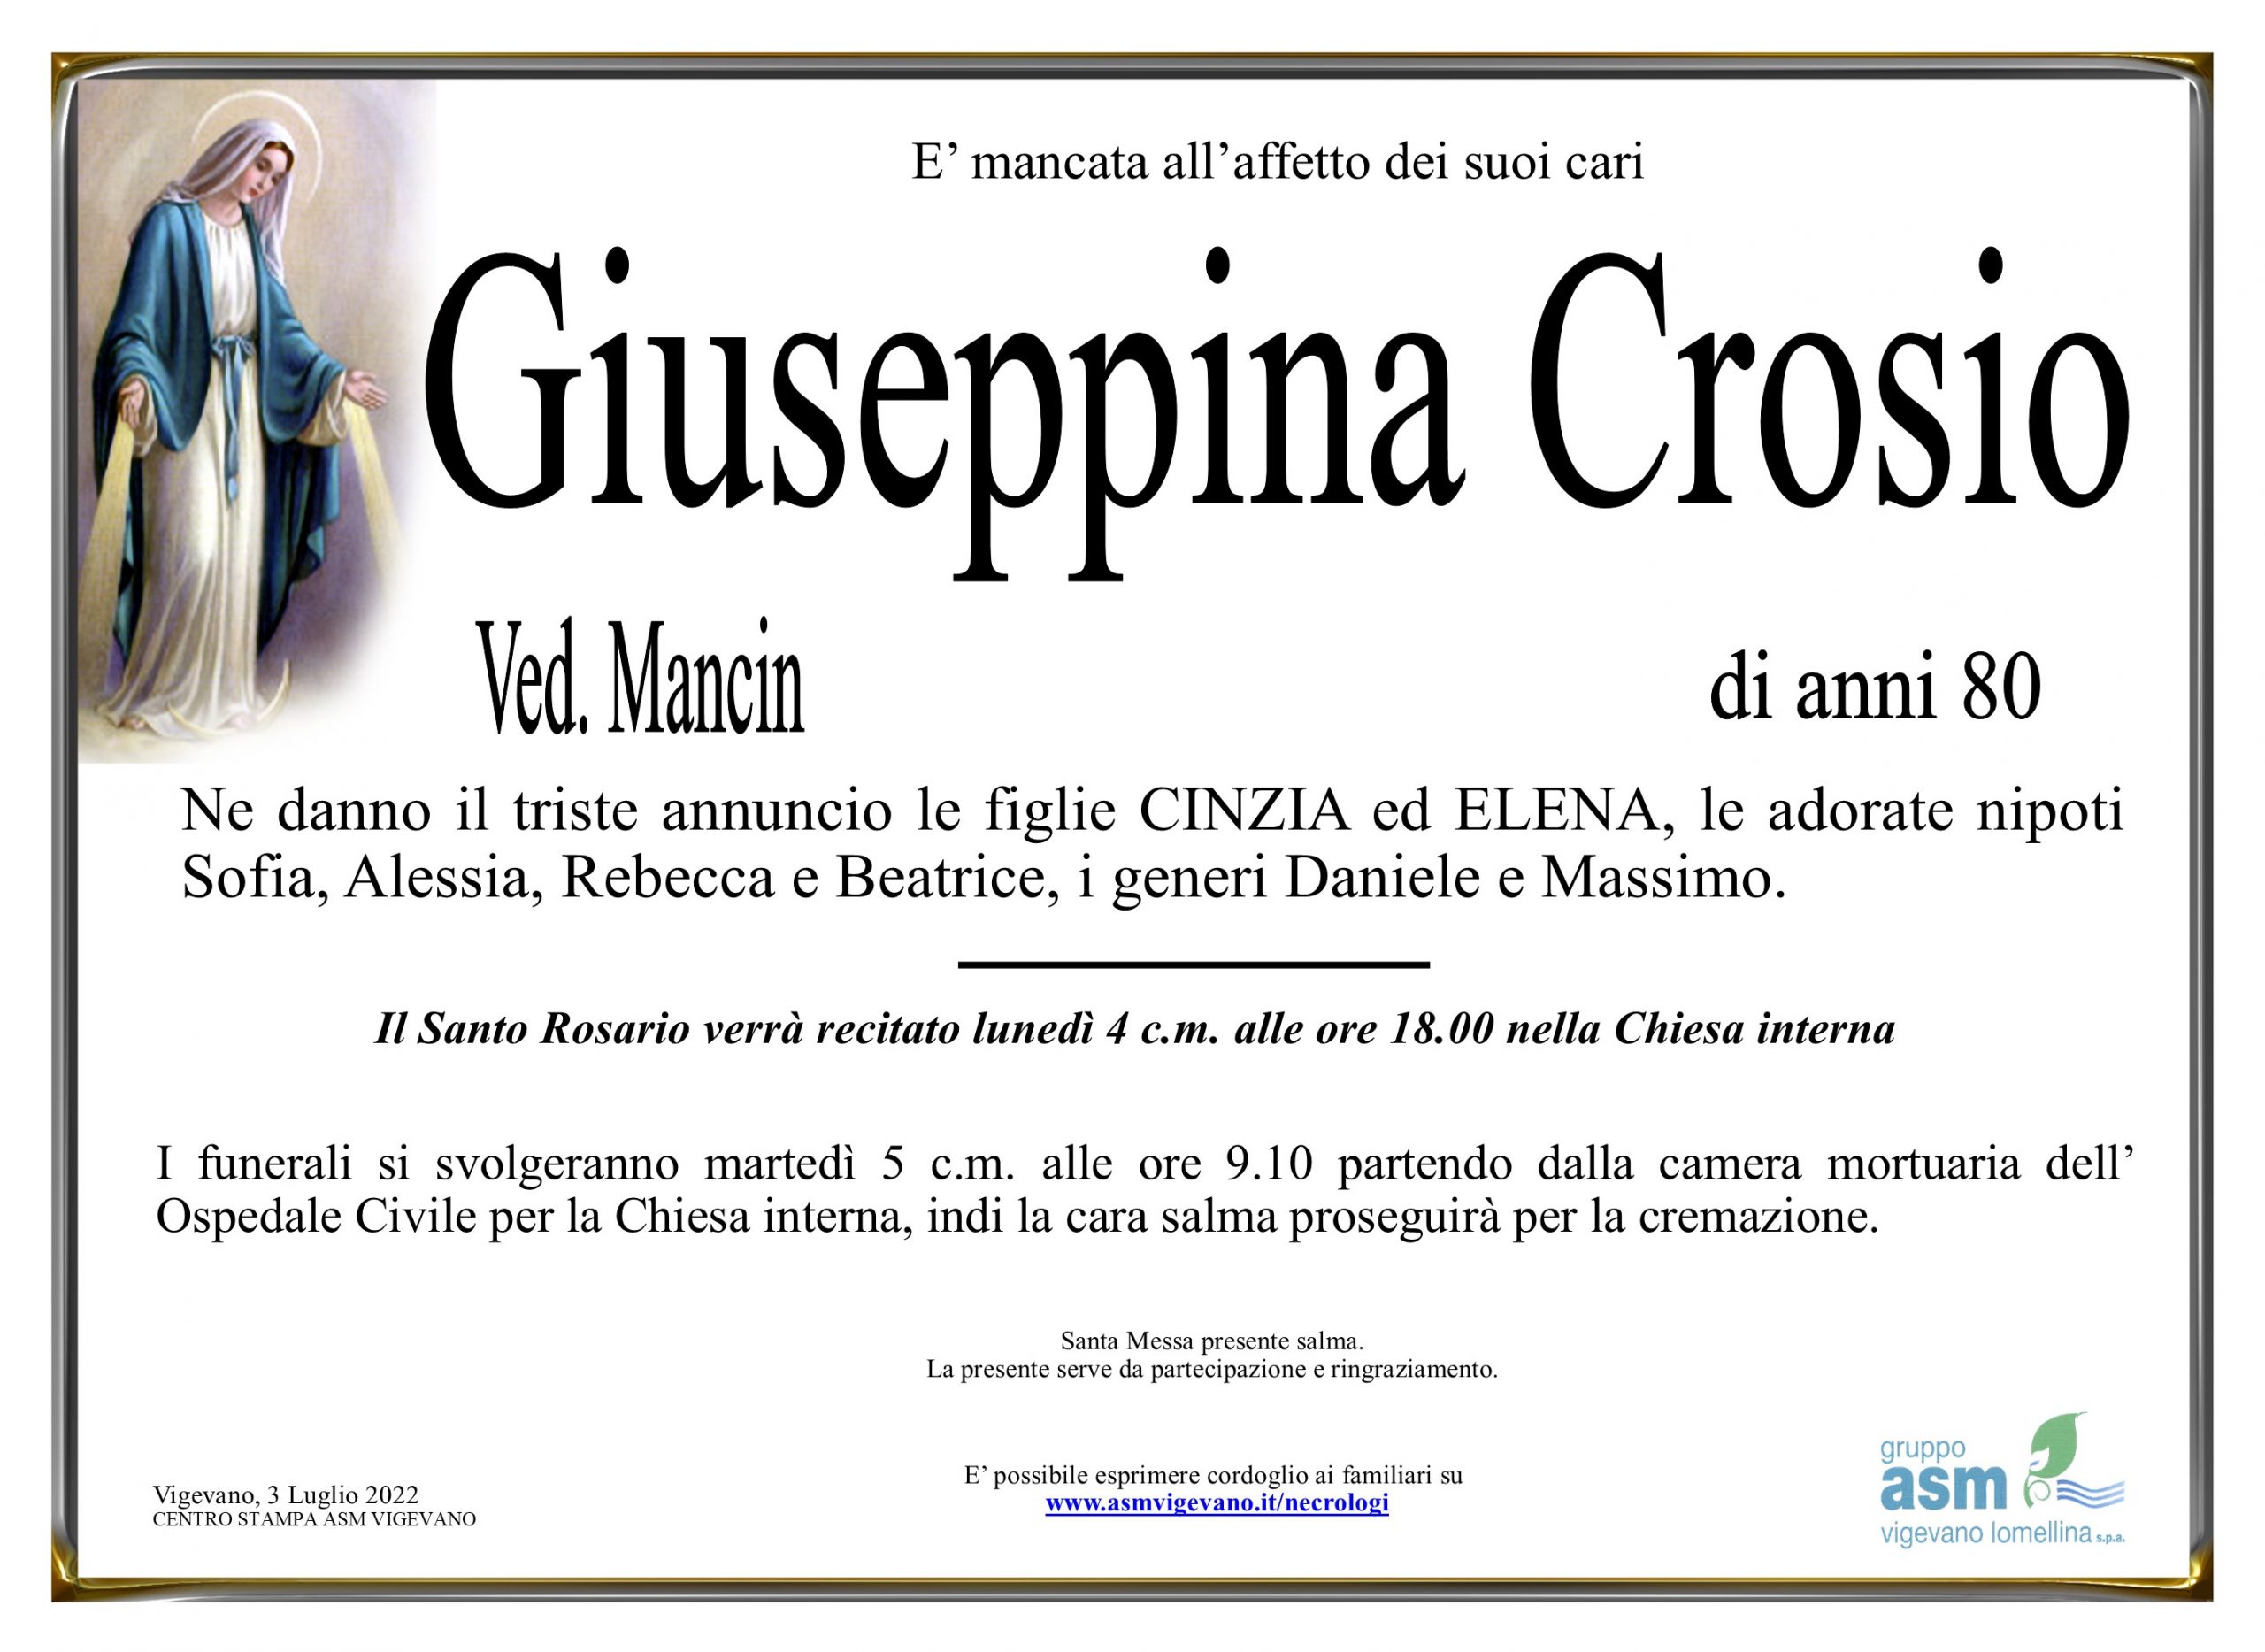 Giuseppina Crosio